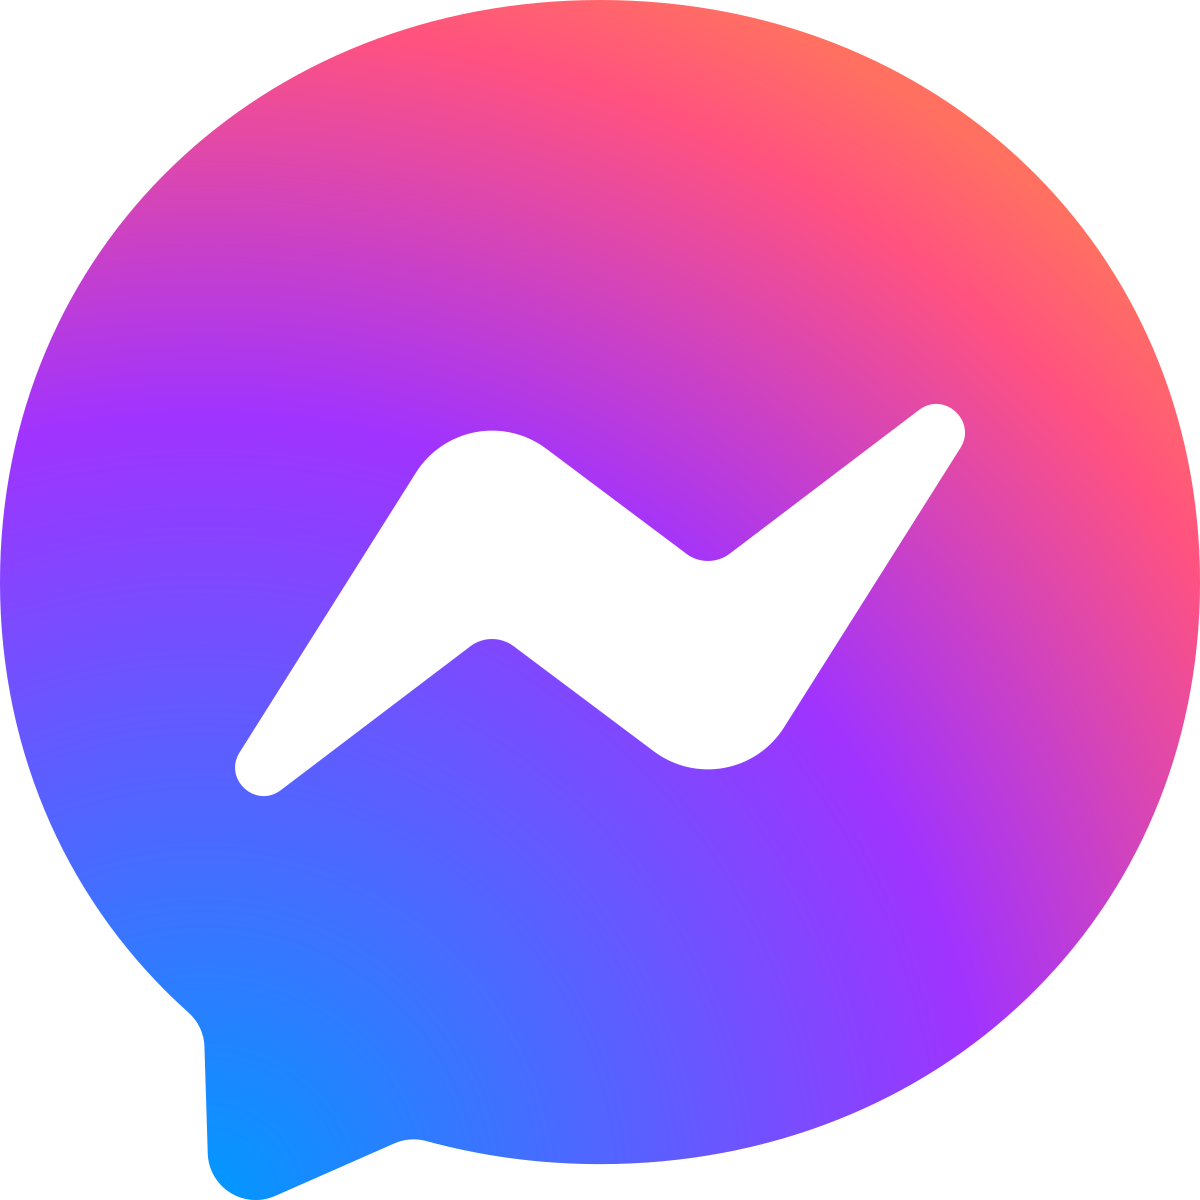 Tải Messenger về Điện Thoại Android – Download Messenger Mới Nhất